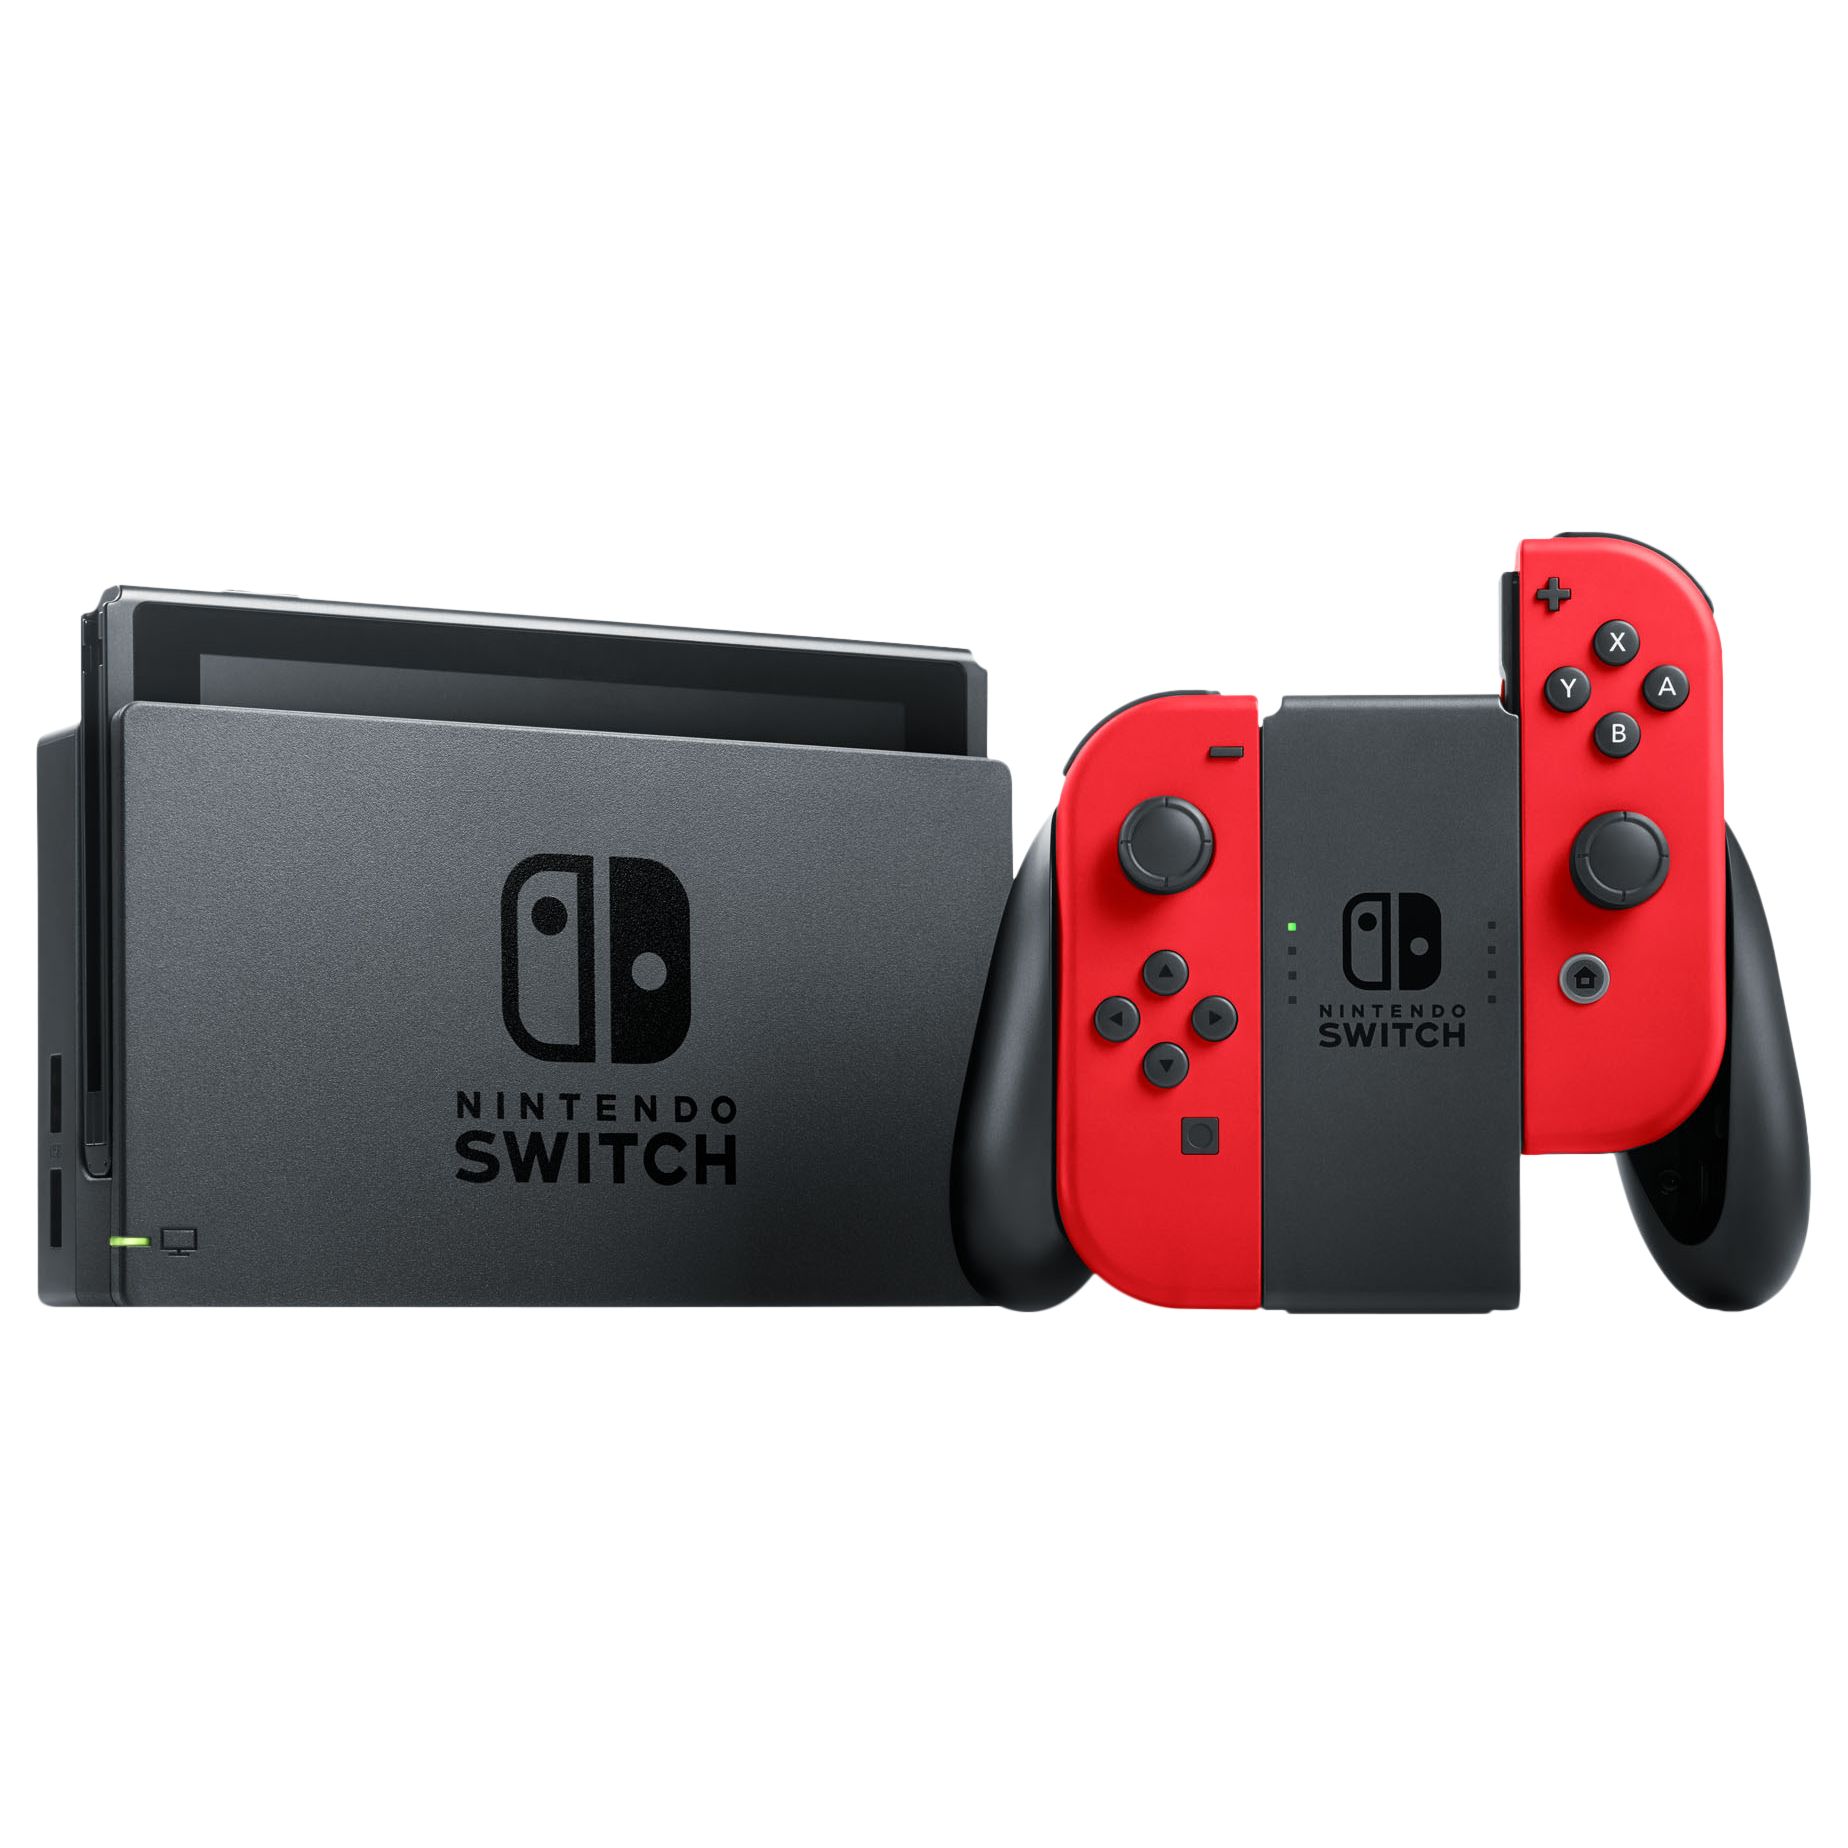 Nintendo switch v. Приставка Нинтендо свитч. Игровая приставка Nintendo Switch. Игровая приставка Nintendo Switch 2. Nintendo Switch Hac-001.